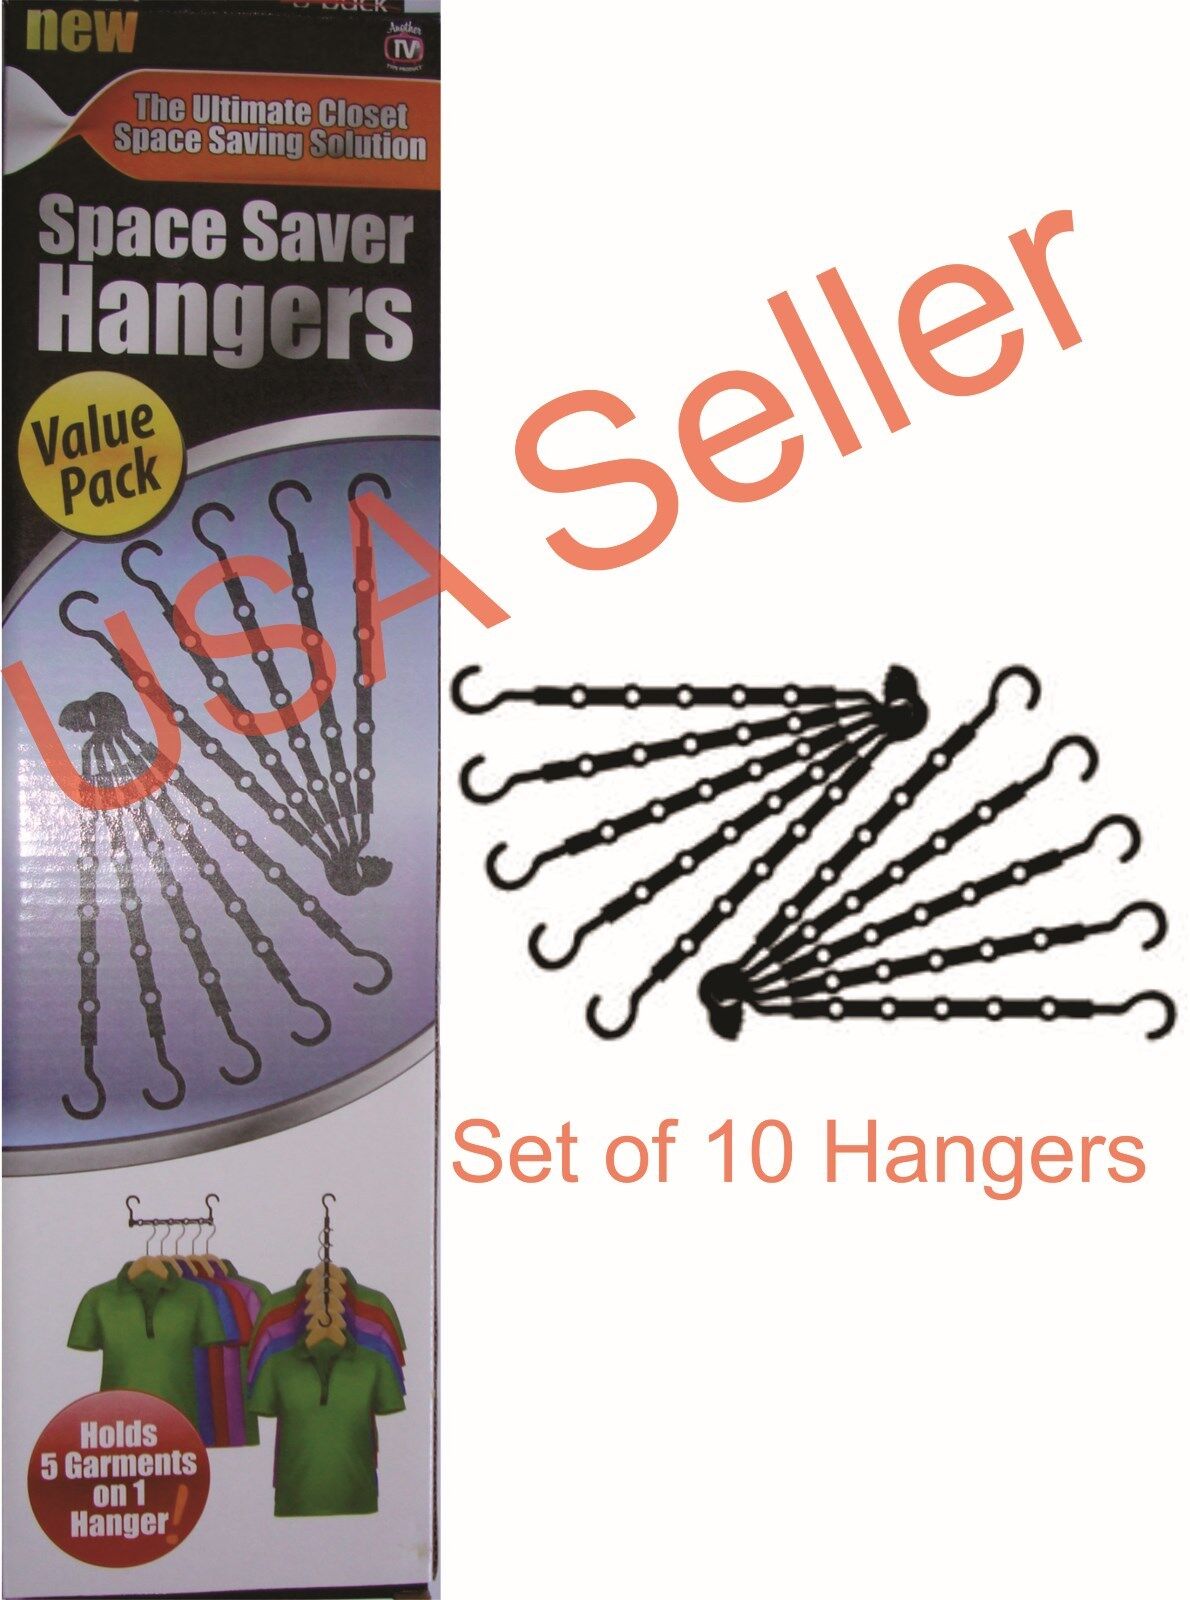 Space saver hangers 10 Pc closet organizing racks multiple clothes hanger holder Space Saver Large ,10 Pack